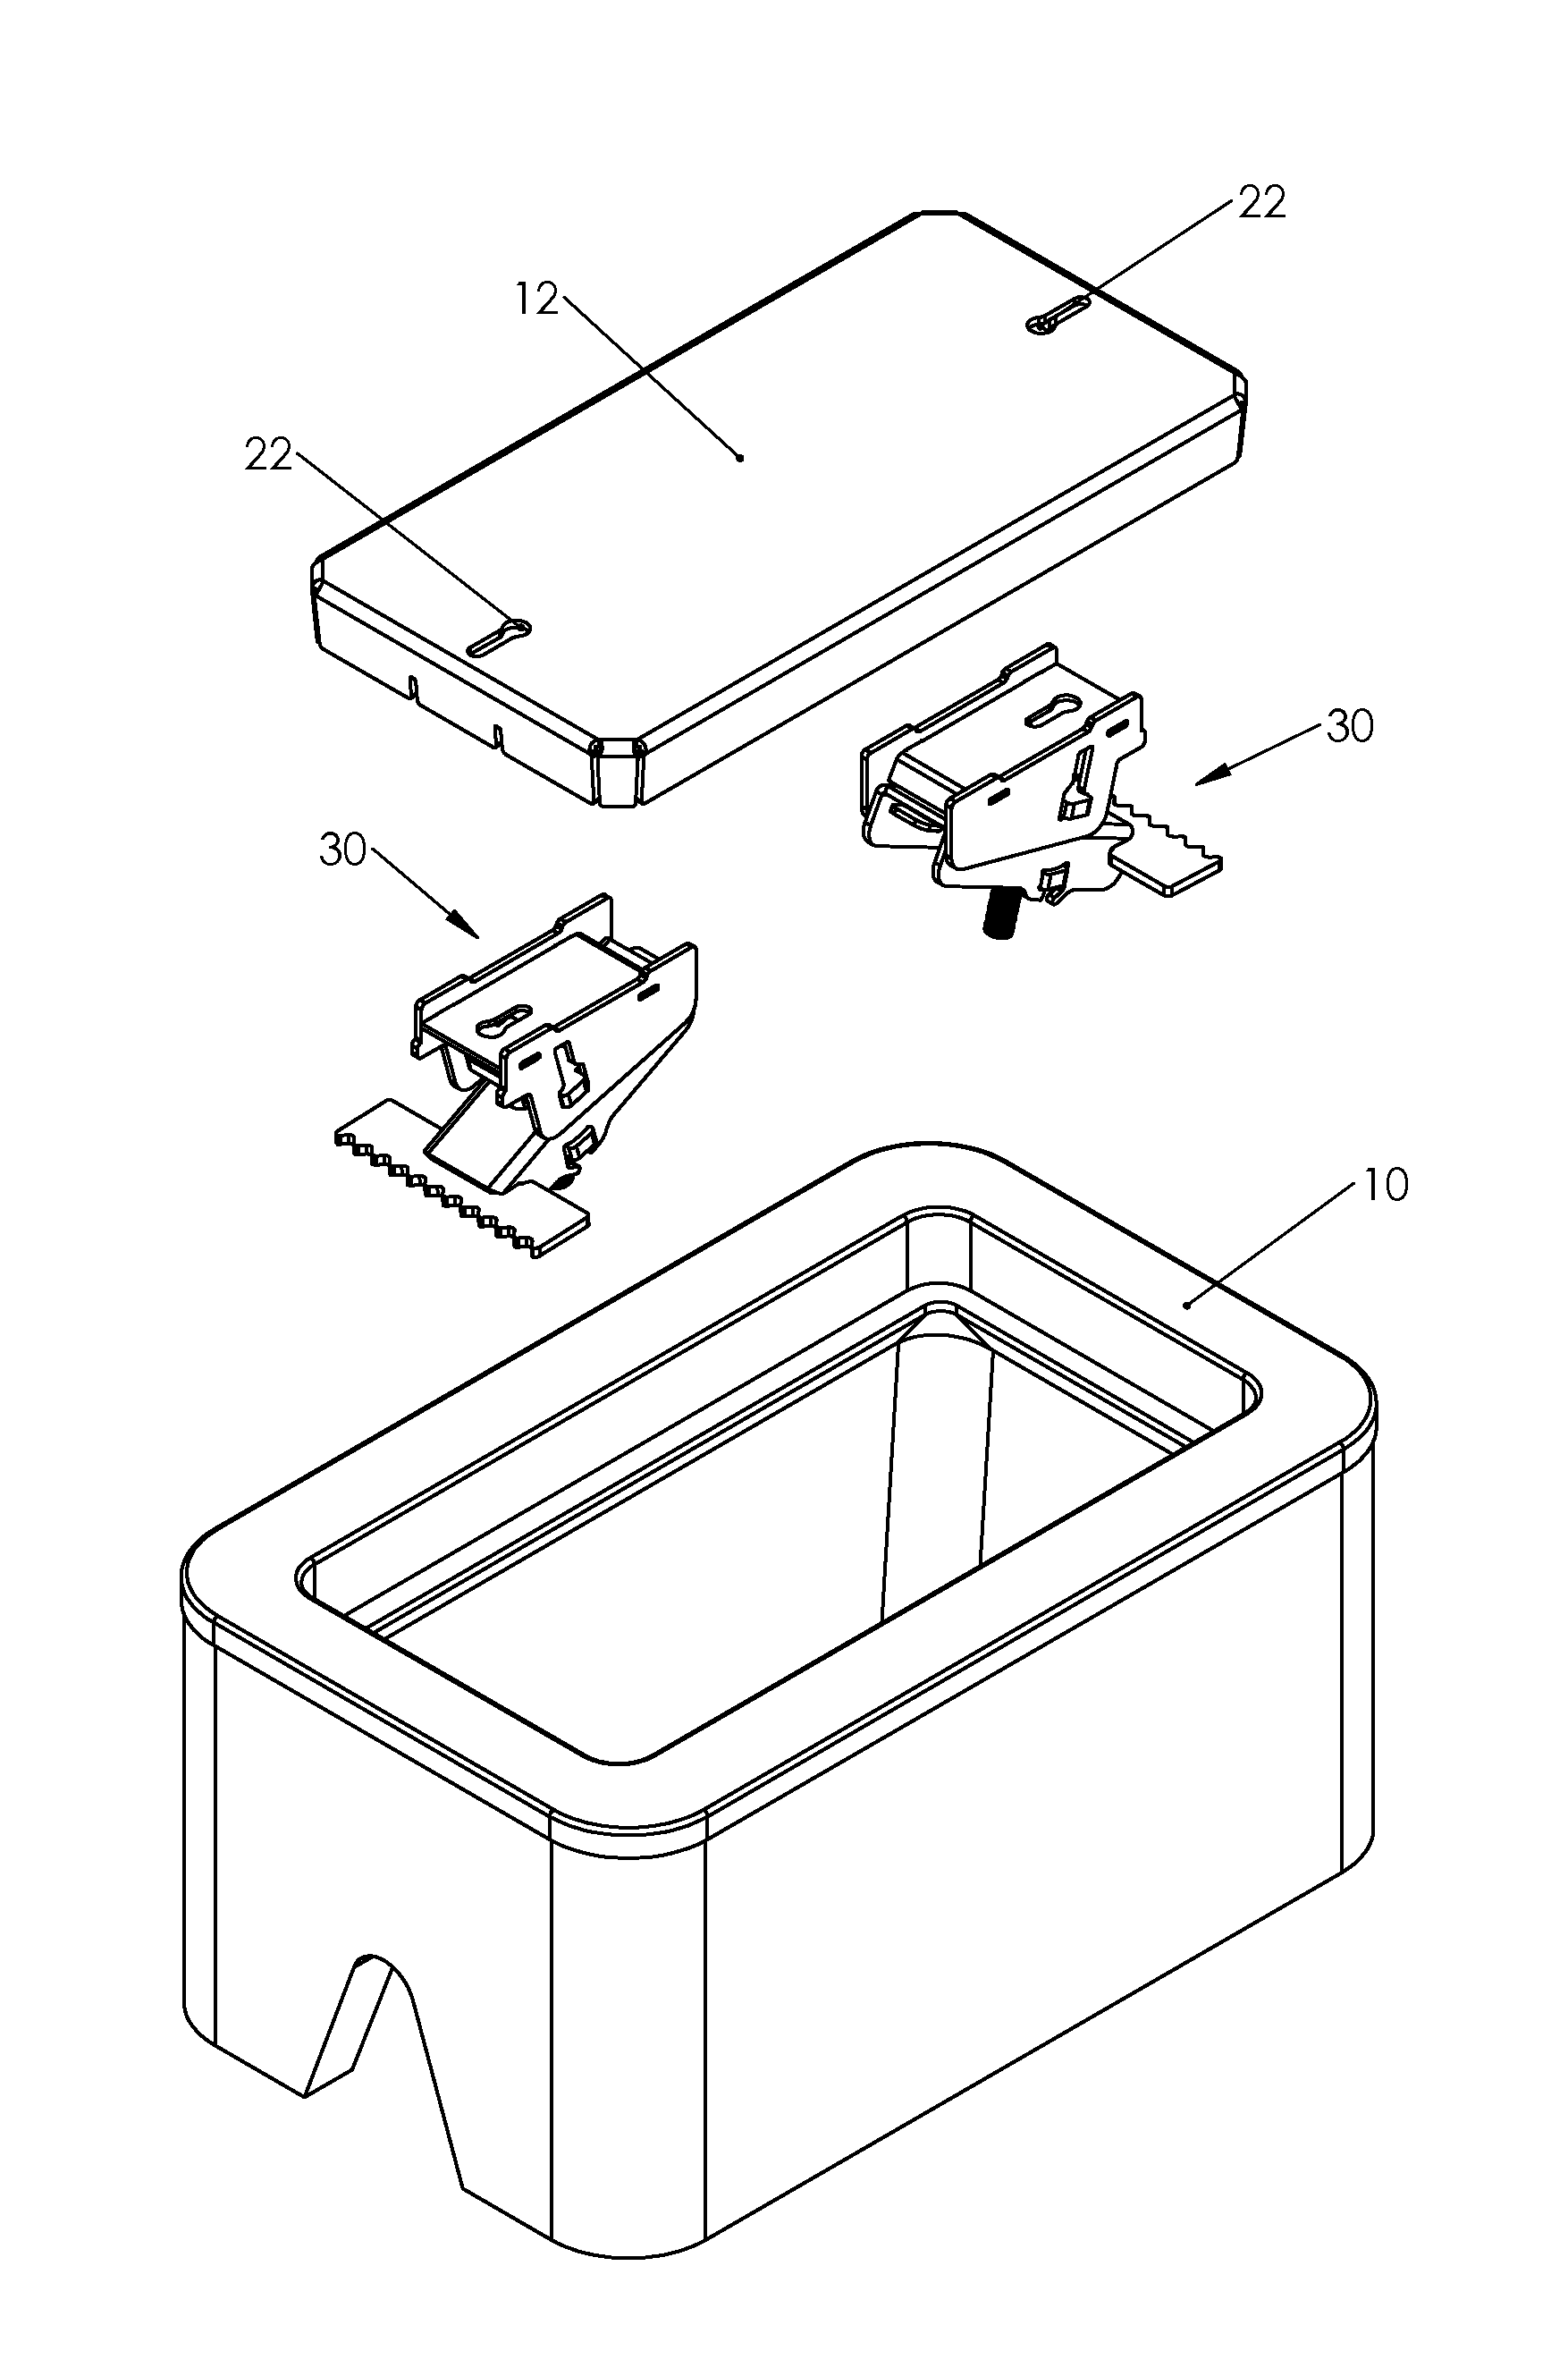 Lockable utility box lid